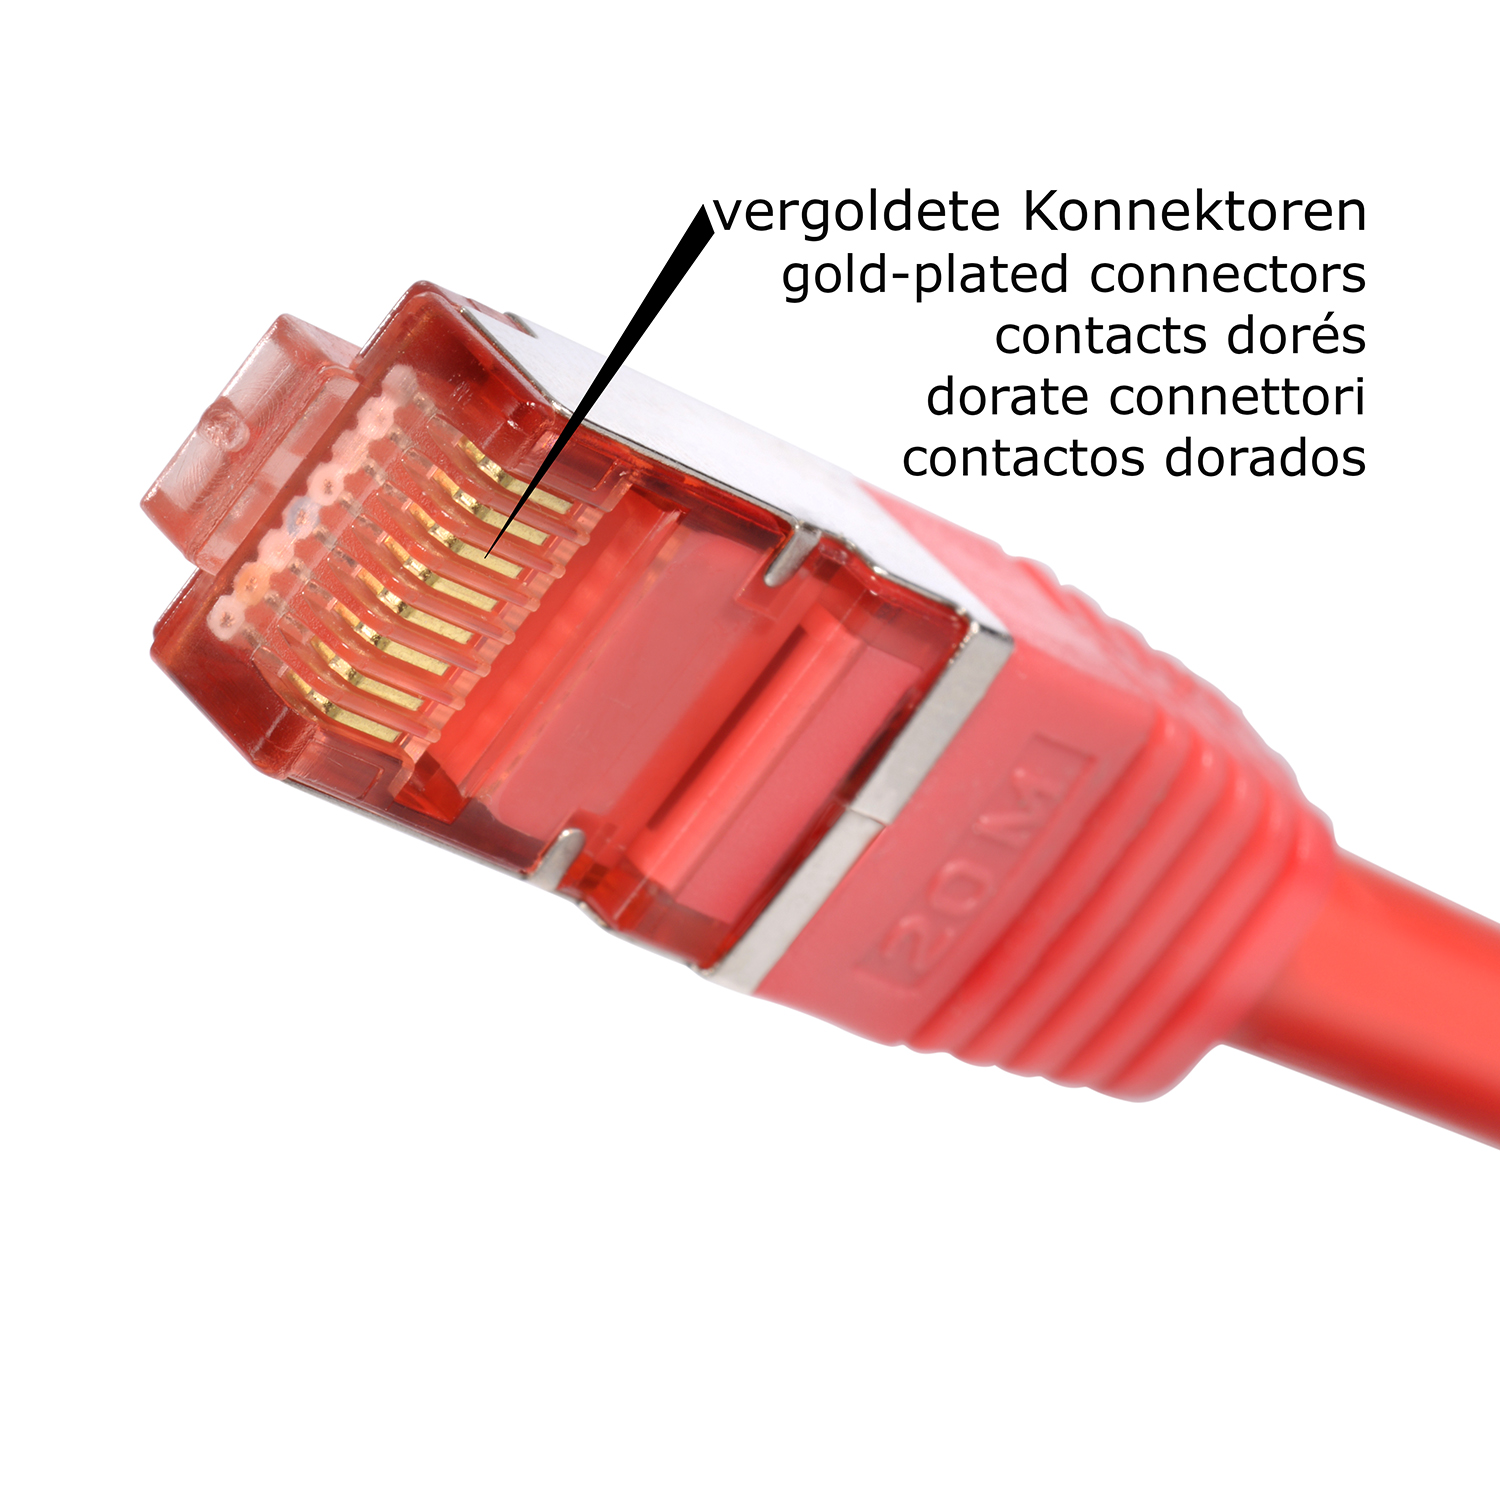 Netzwerkkabel 5er 2m S/FTP 1000Mbit, rot, Netzwerkkabel, / Patchkabel Pack TPFNET 2 m